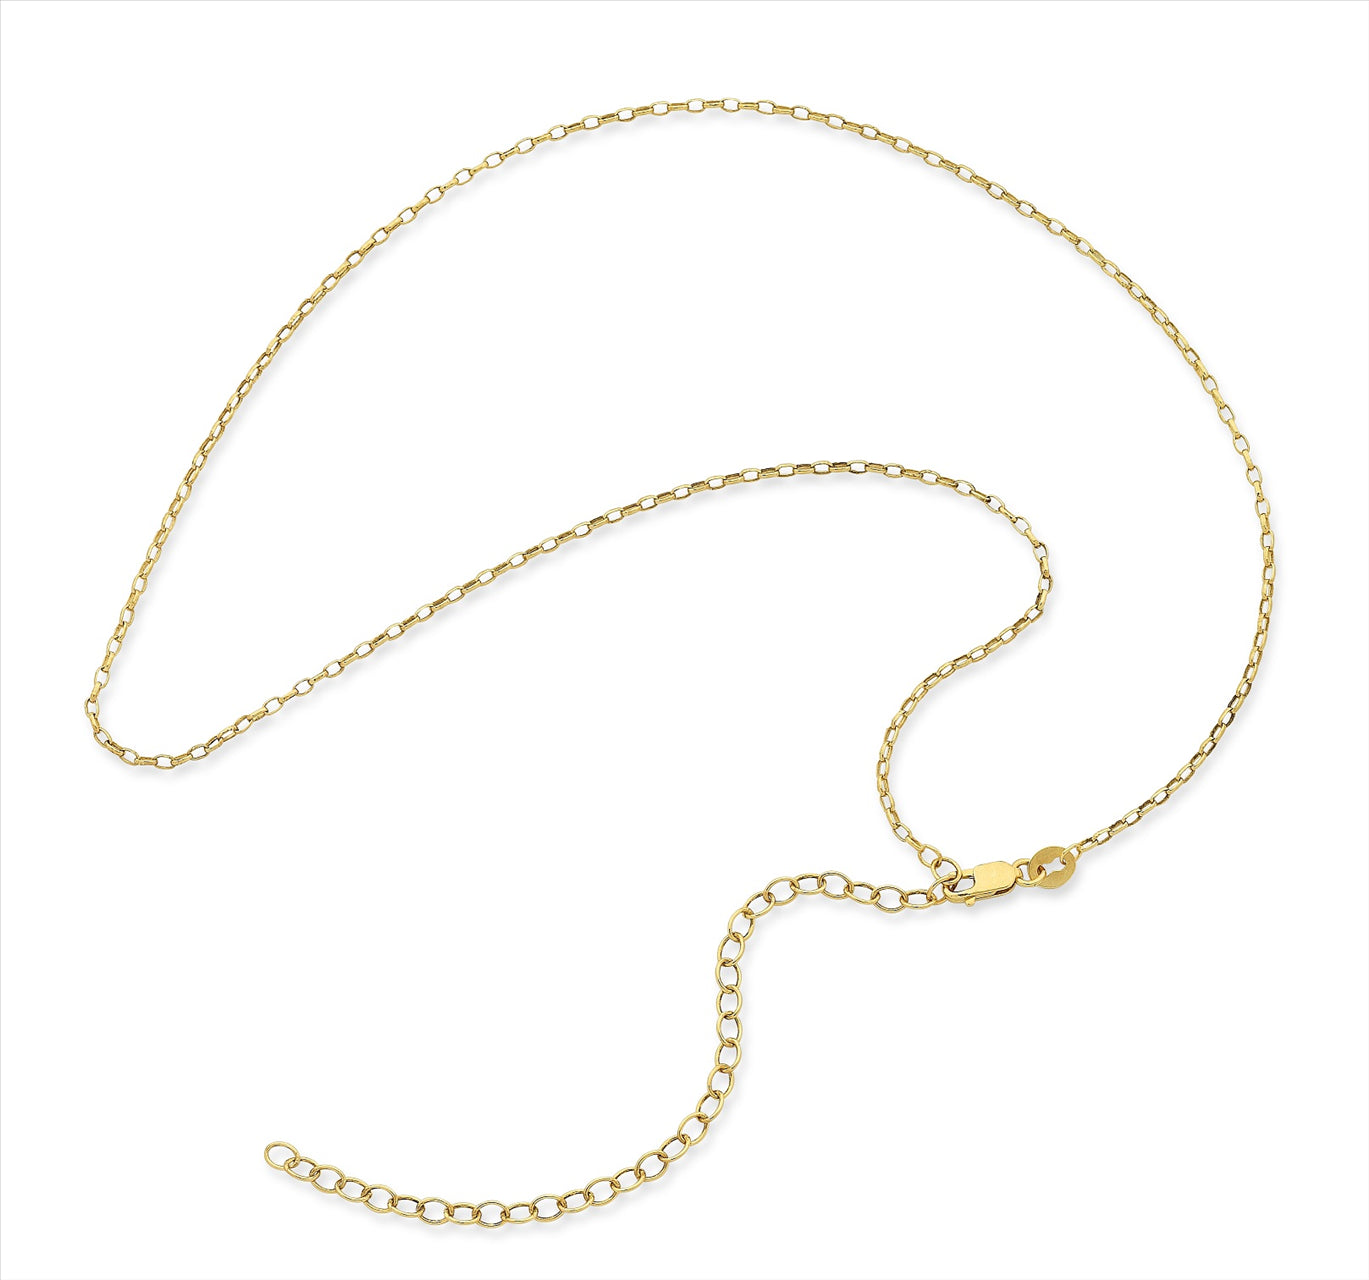 9 carat yellow gold silver filled belcher adjustable chain - 40cm (plus 10cm extension)